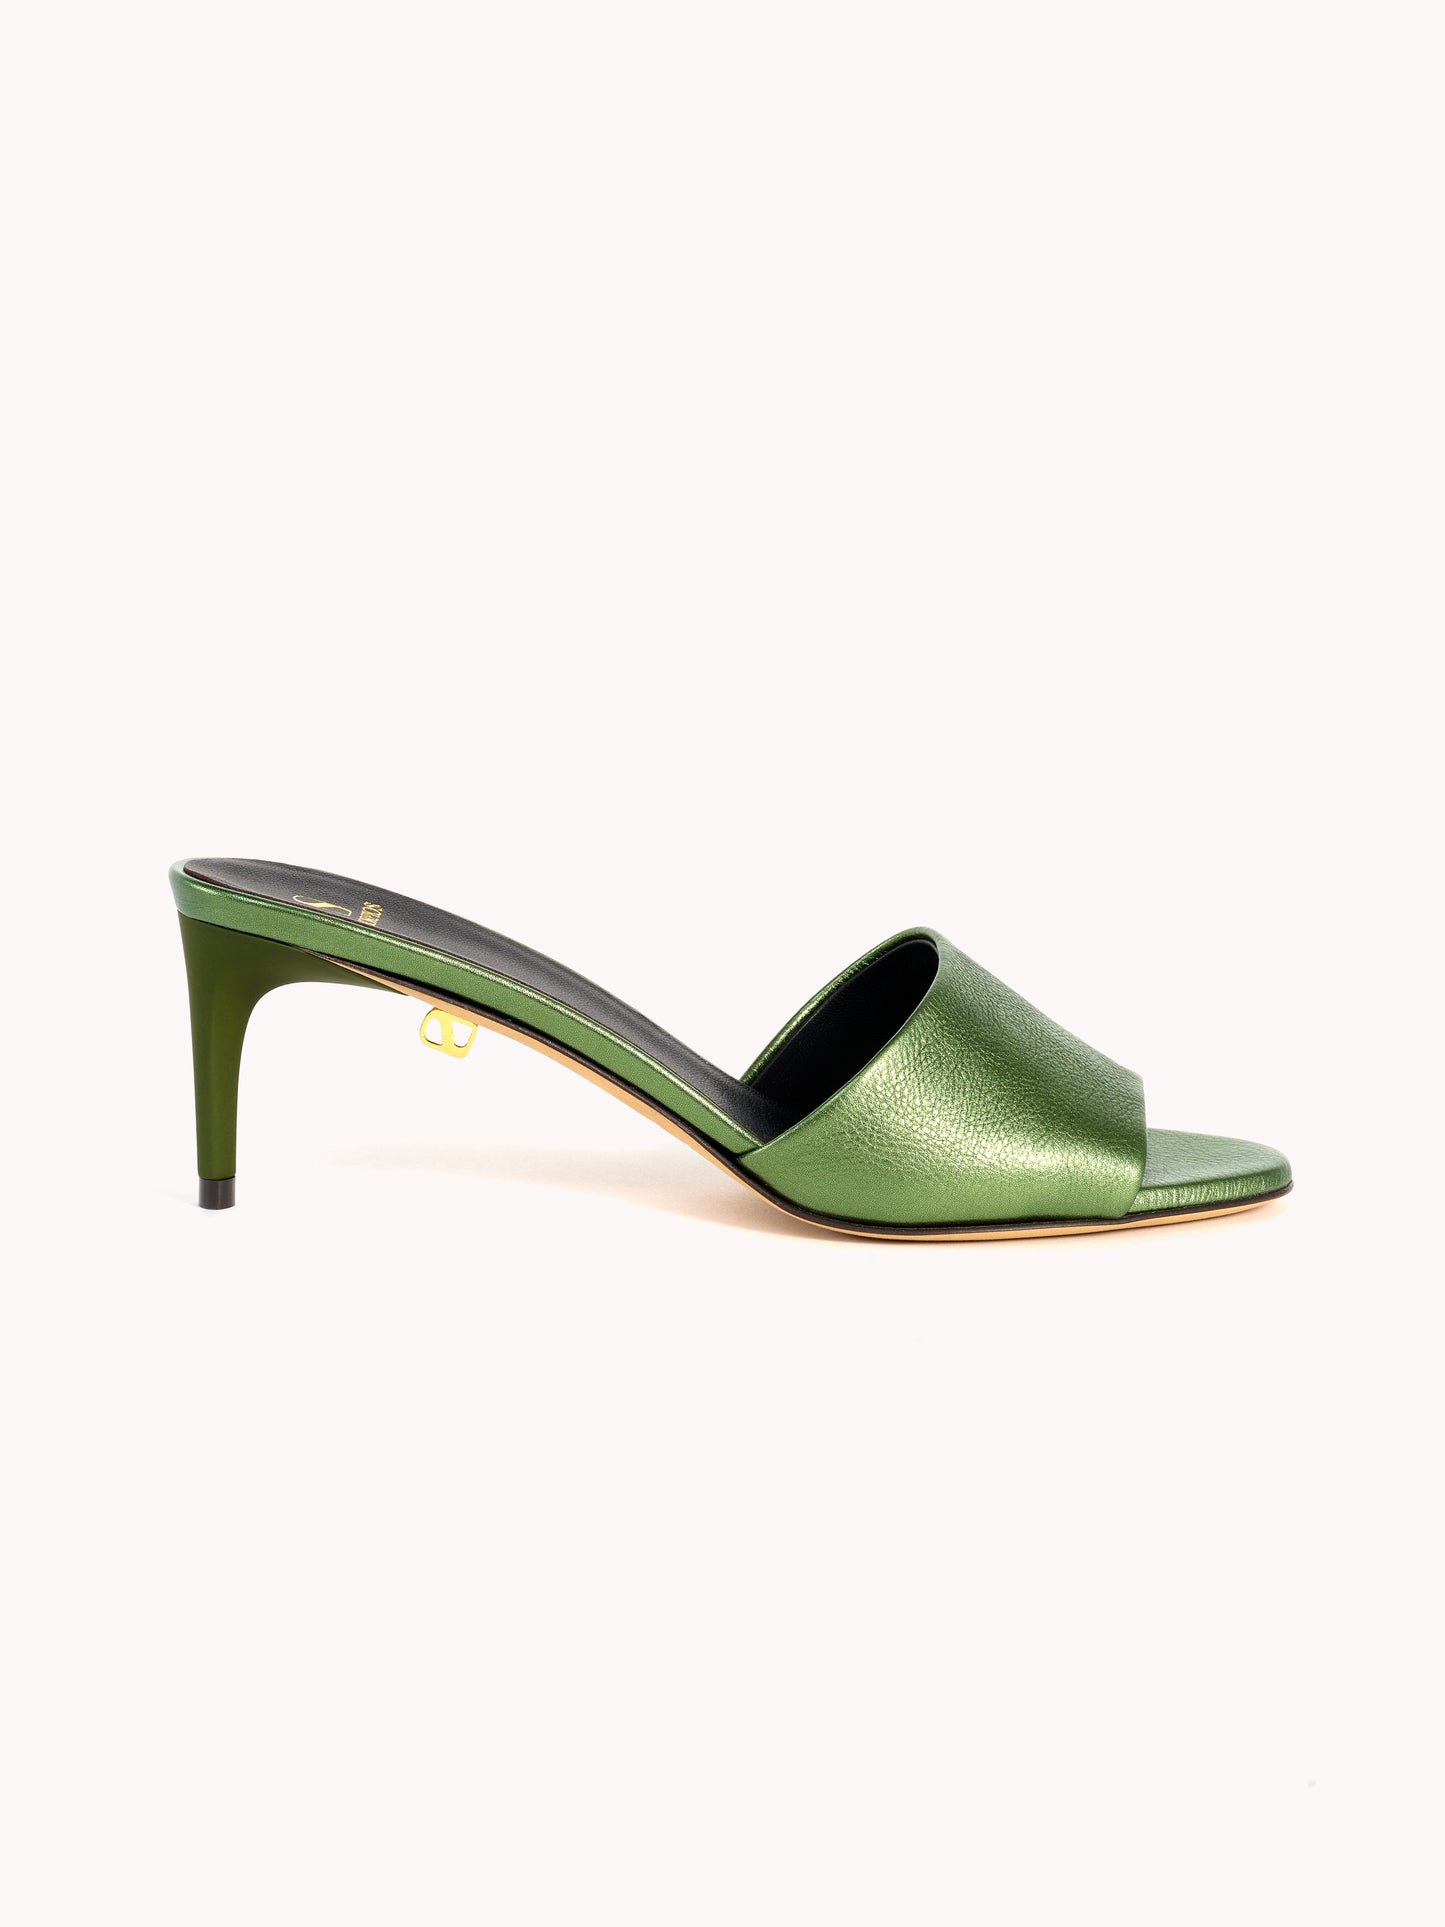 elegant mid-heel stiletto metallic green leather skorpios